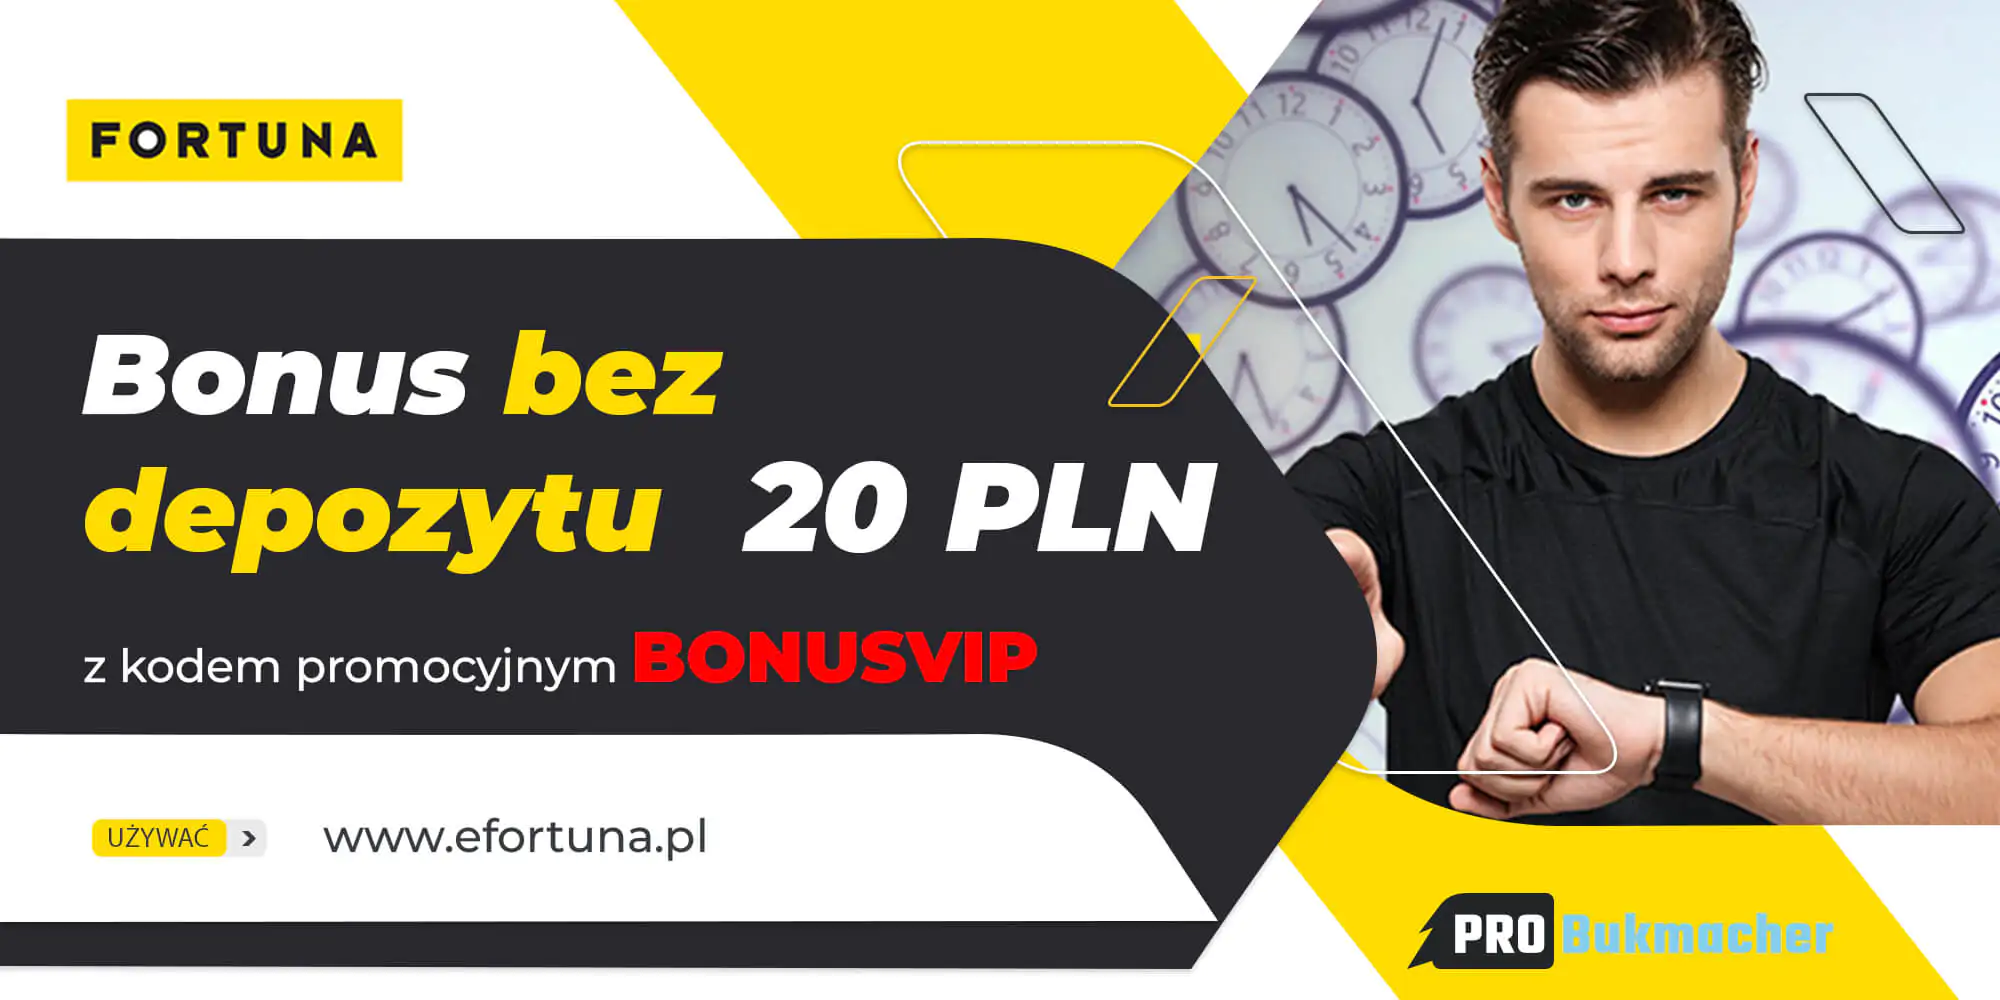 Kod Promocijny BONUSVIP daje Bonus bez depozytu 20 PLN w Fortunie